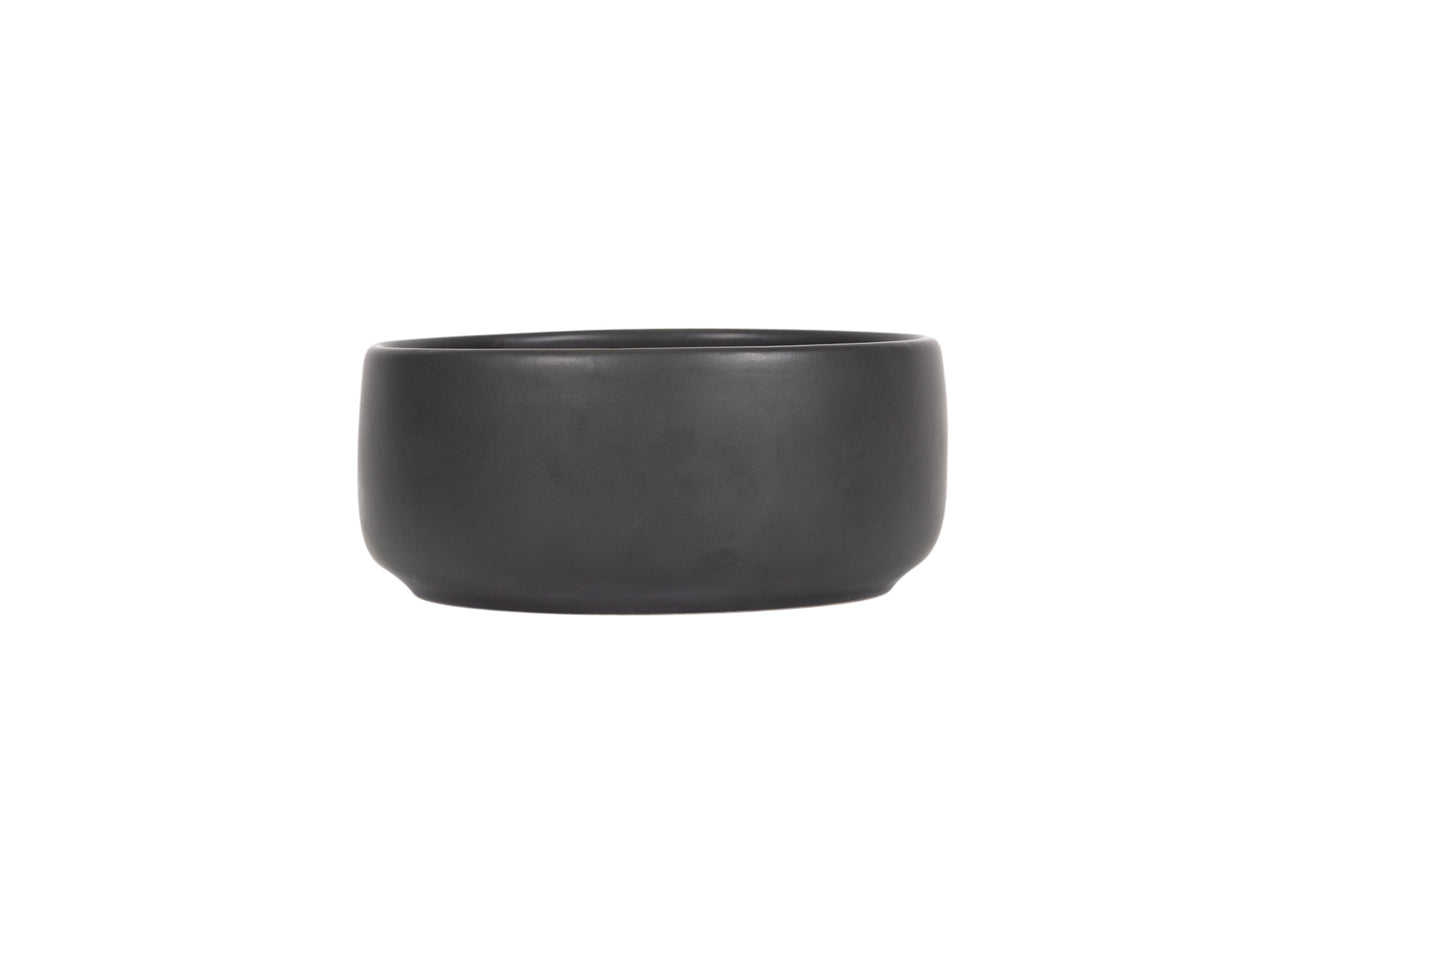 Mog and Bone Designer Handmade Ceramic Dog Bowl - Black 1800ml